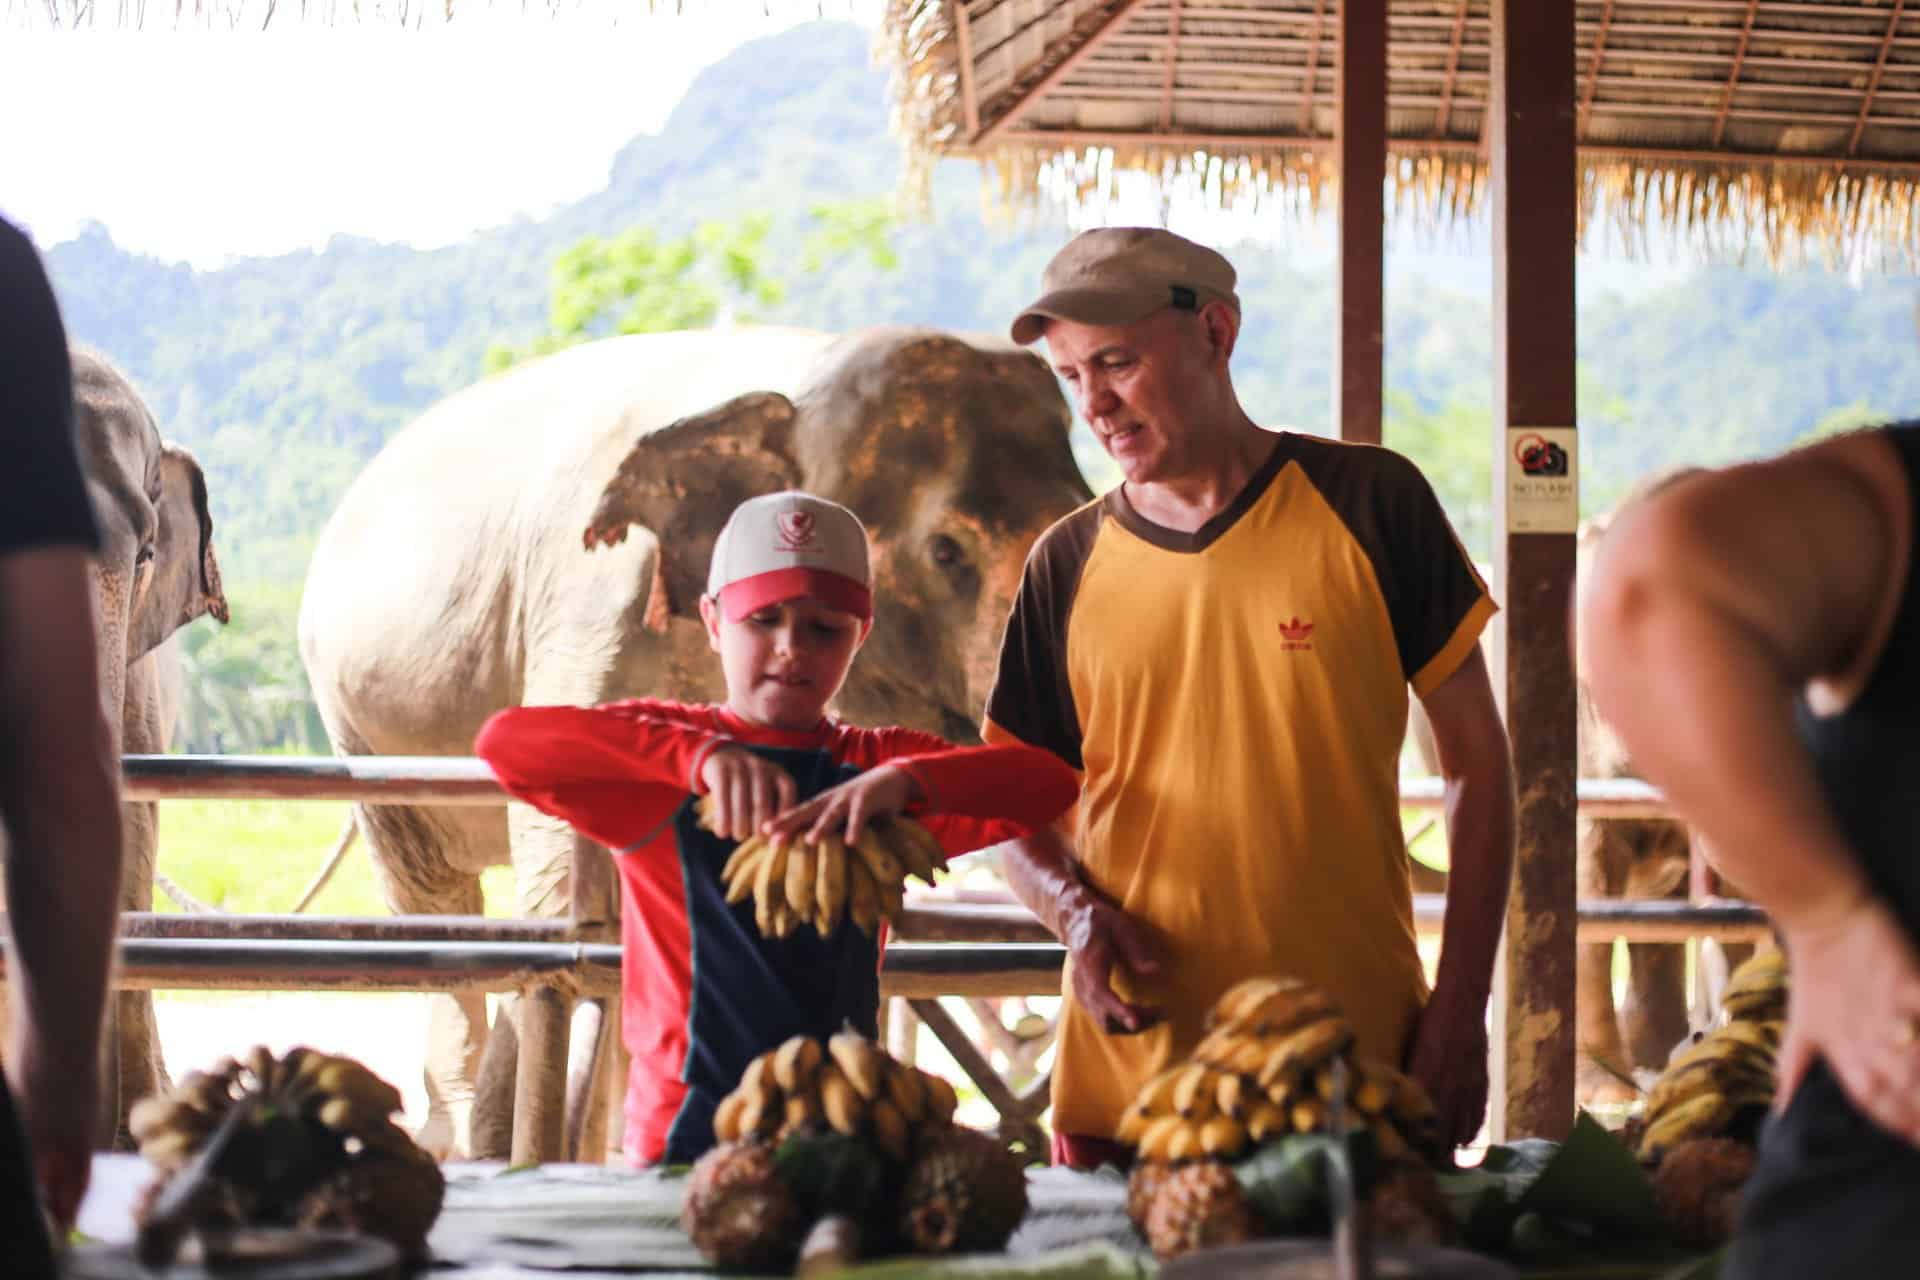 prepare food for the elephants before hand-feeding them